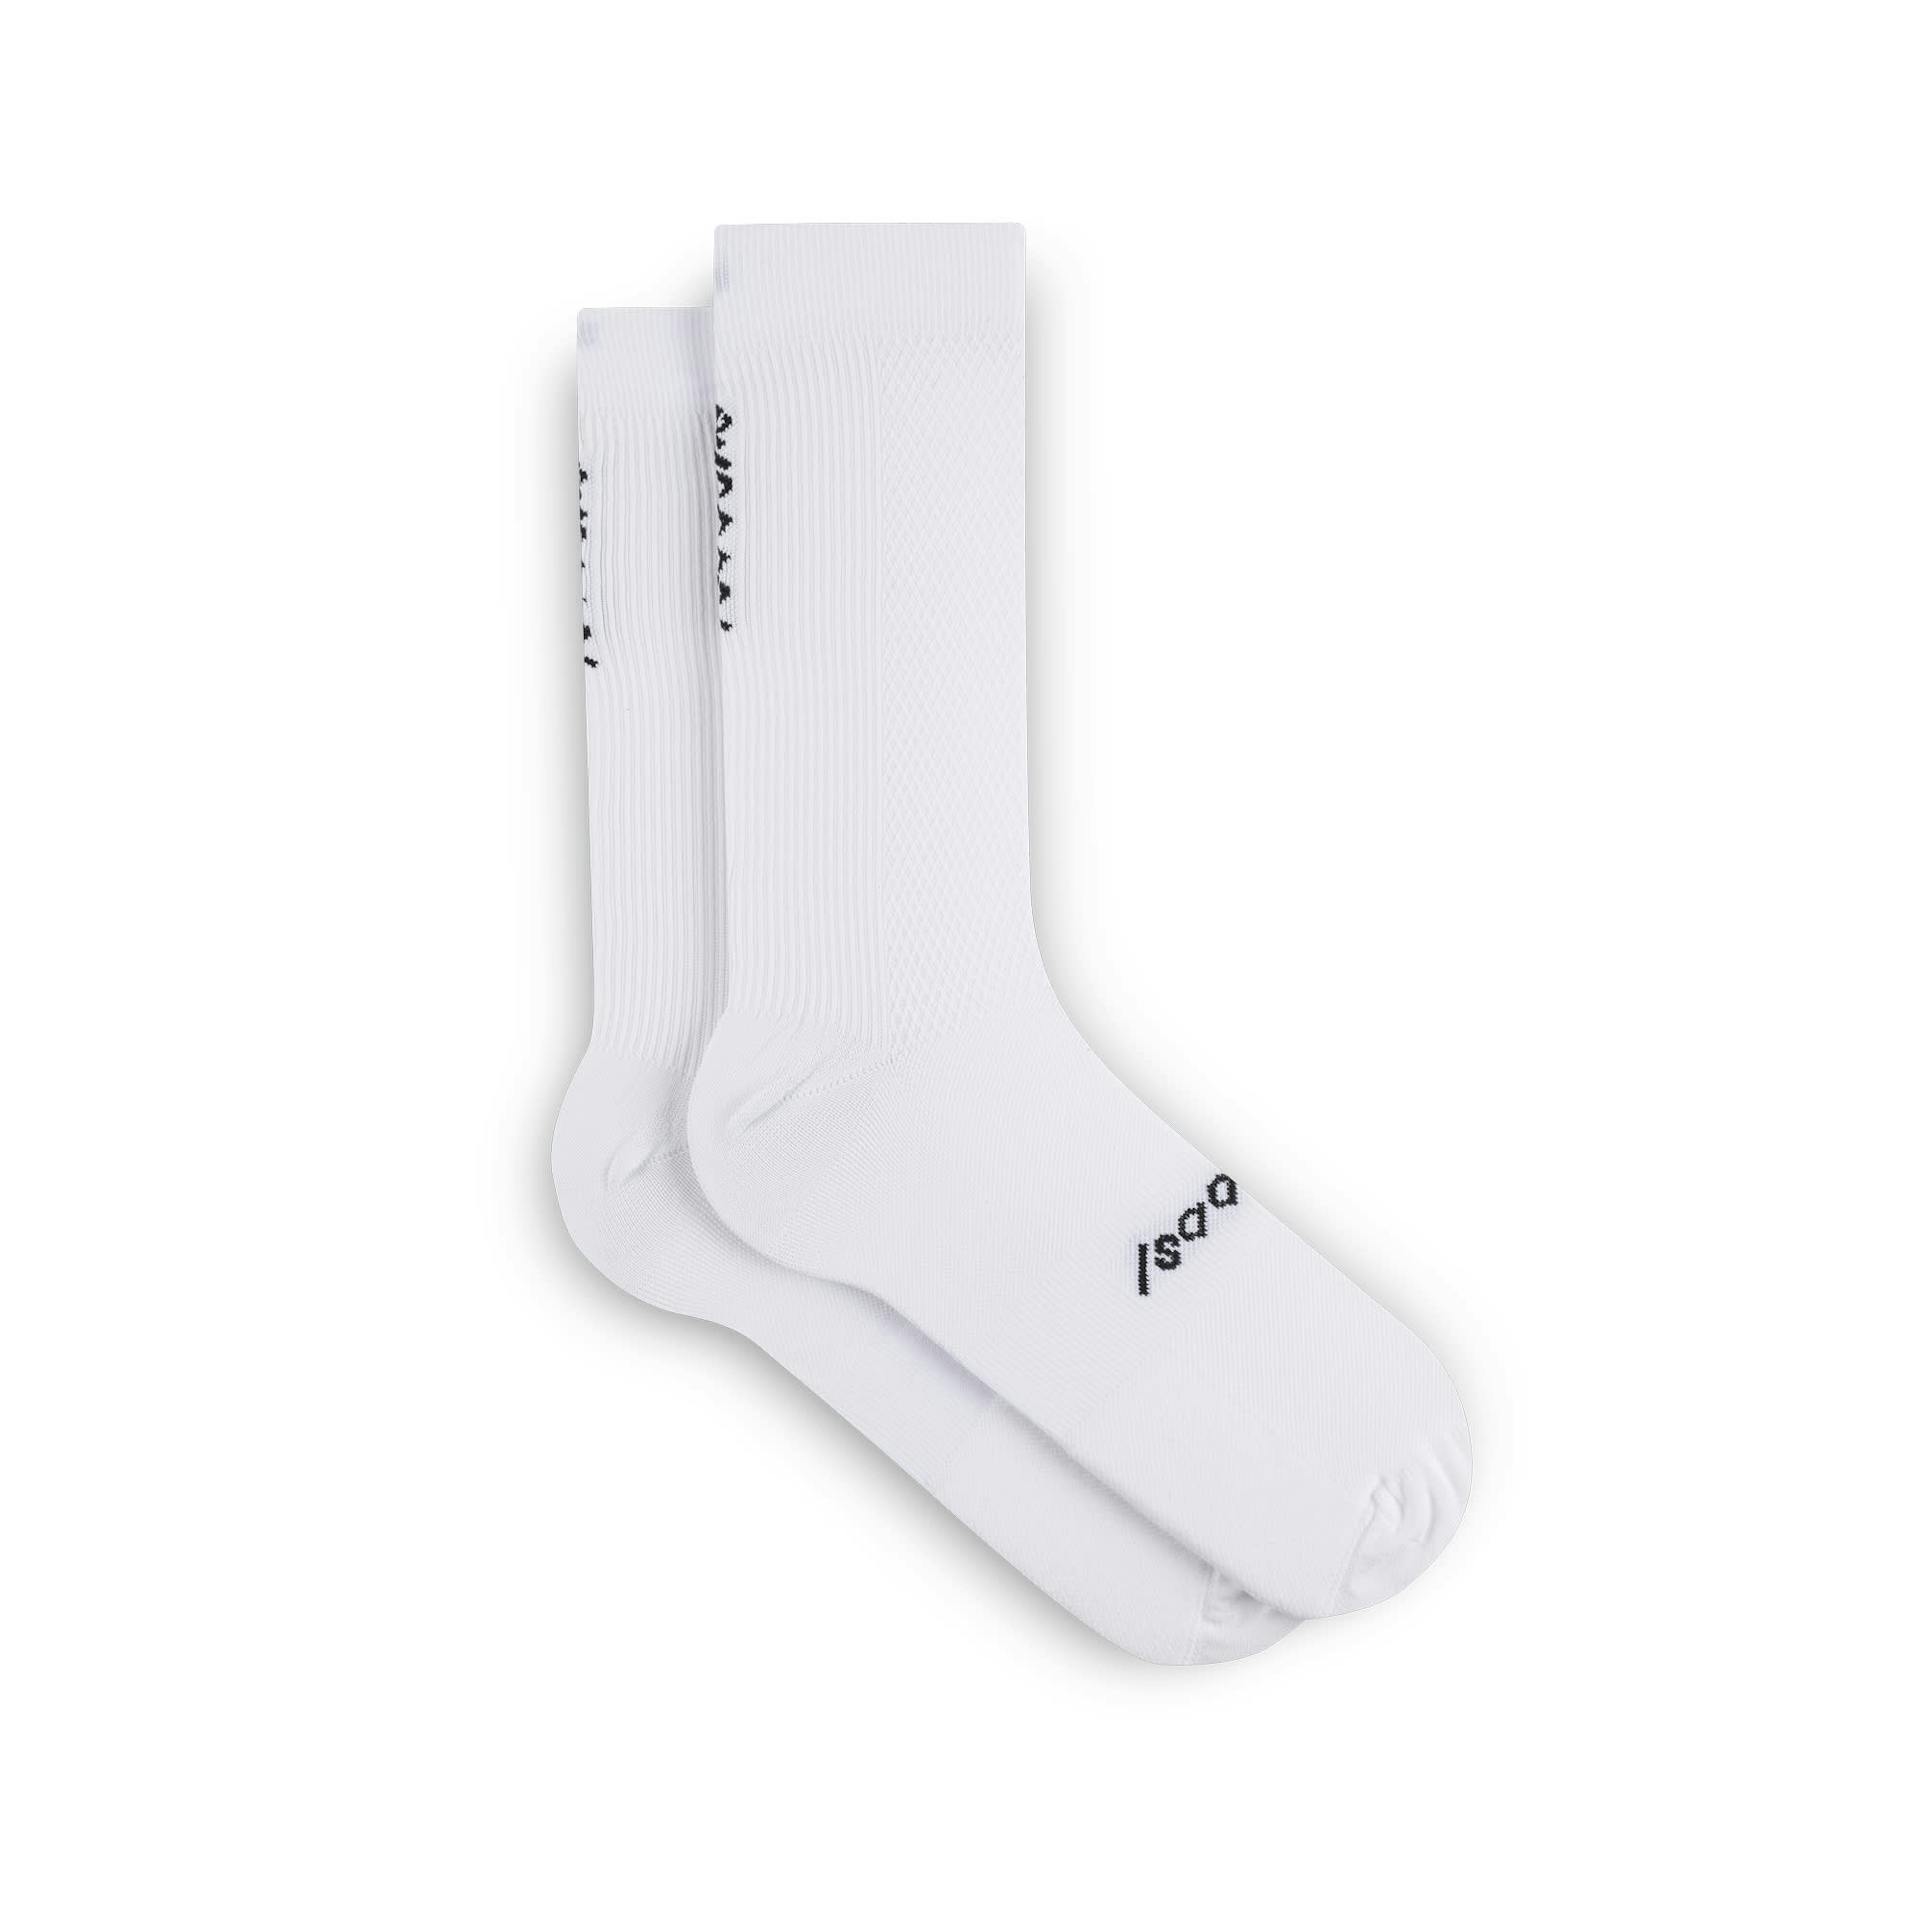 Signature Socks - White
                        